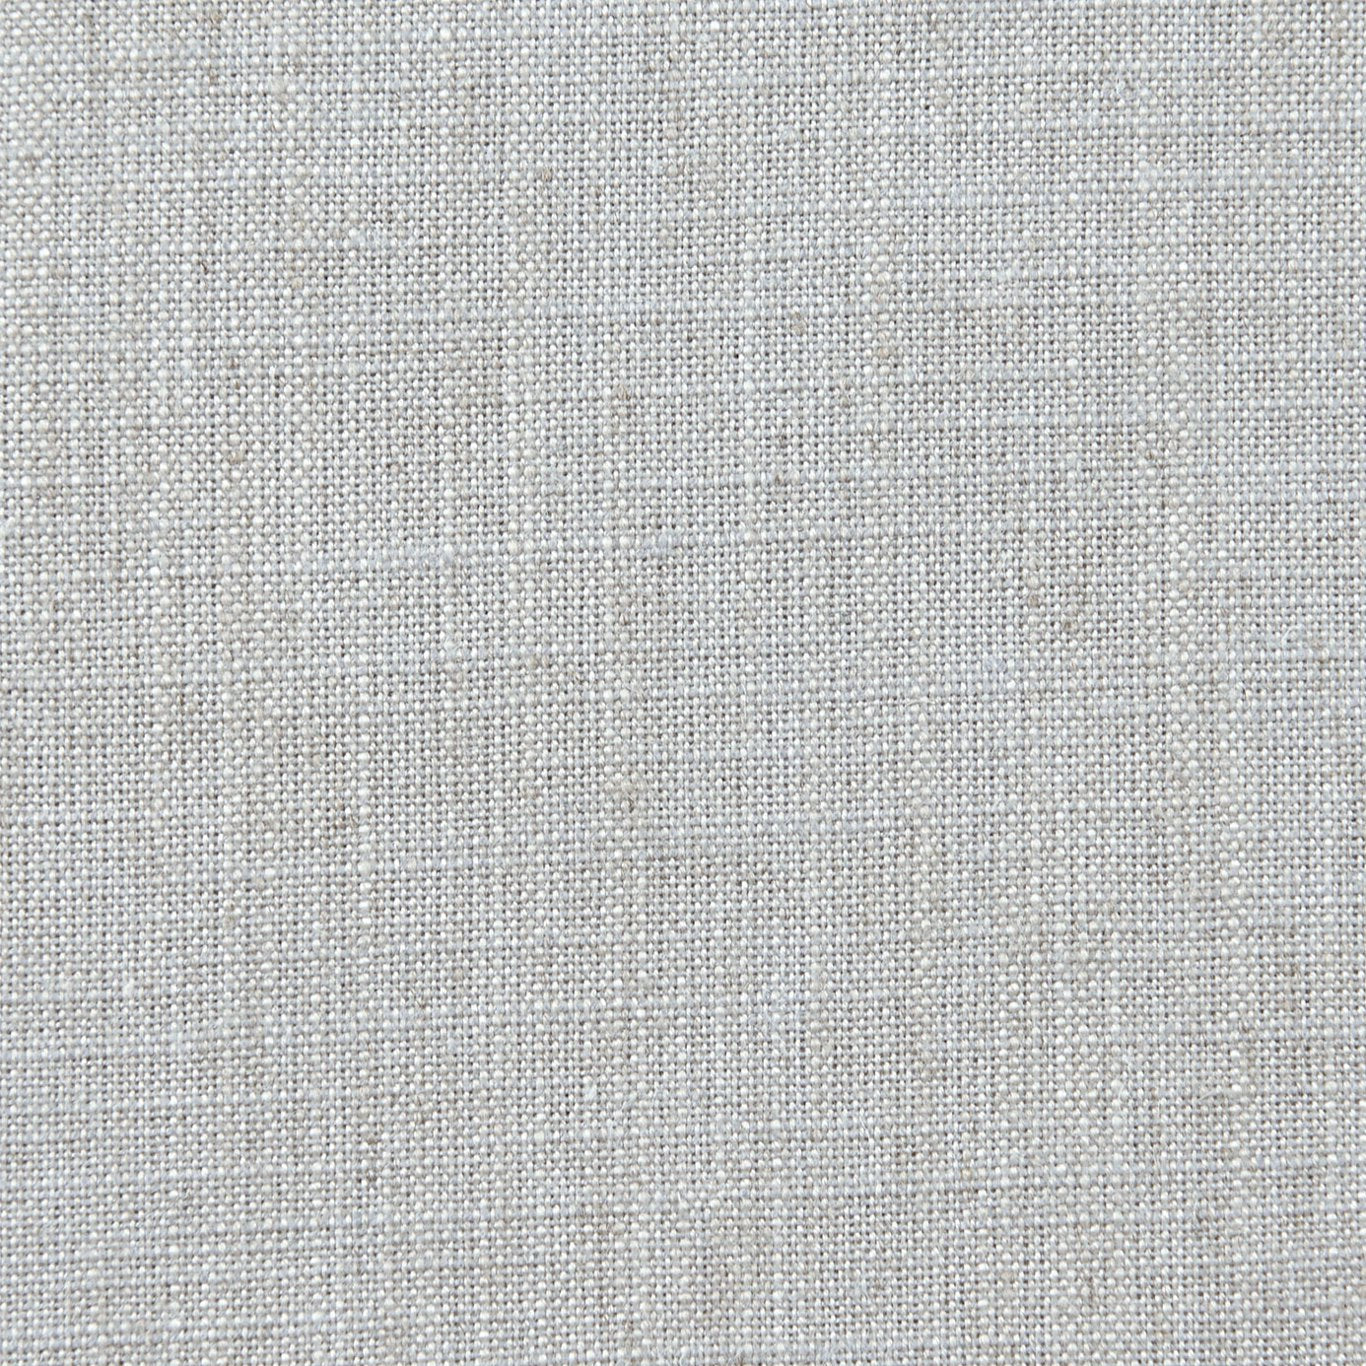 Biarritz Fabric by Clarke & Clarke - F0965/41 - Seagull